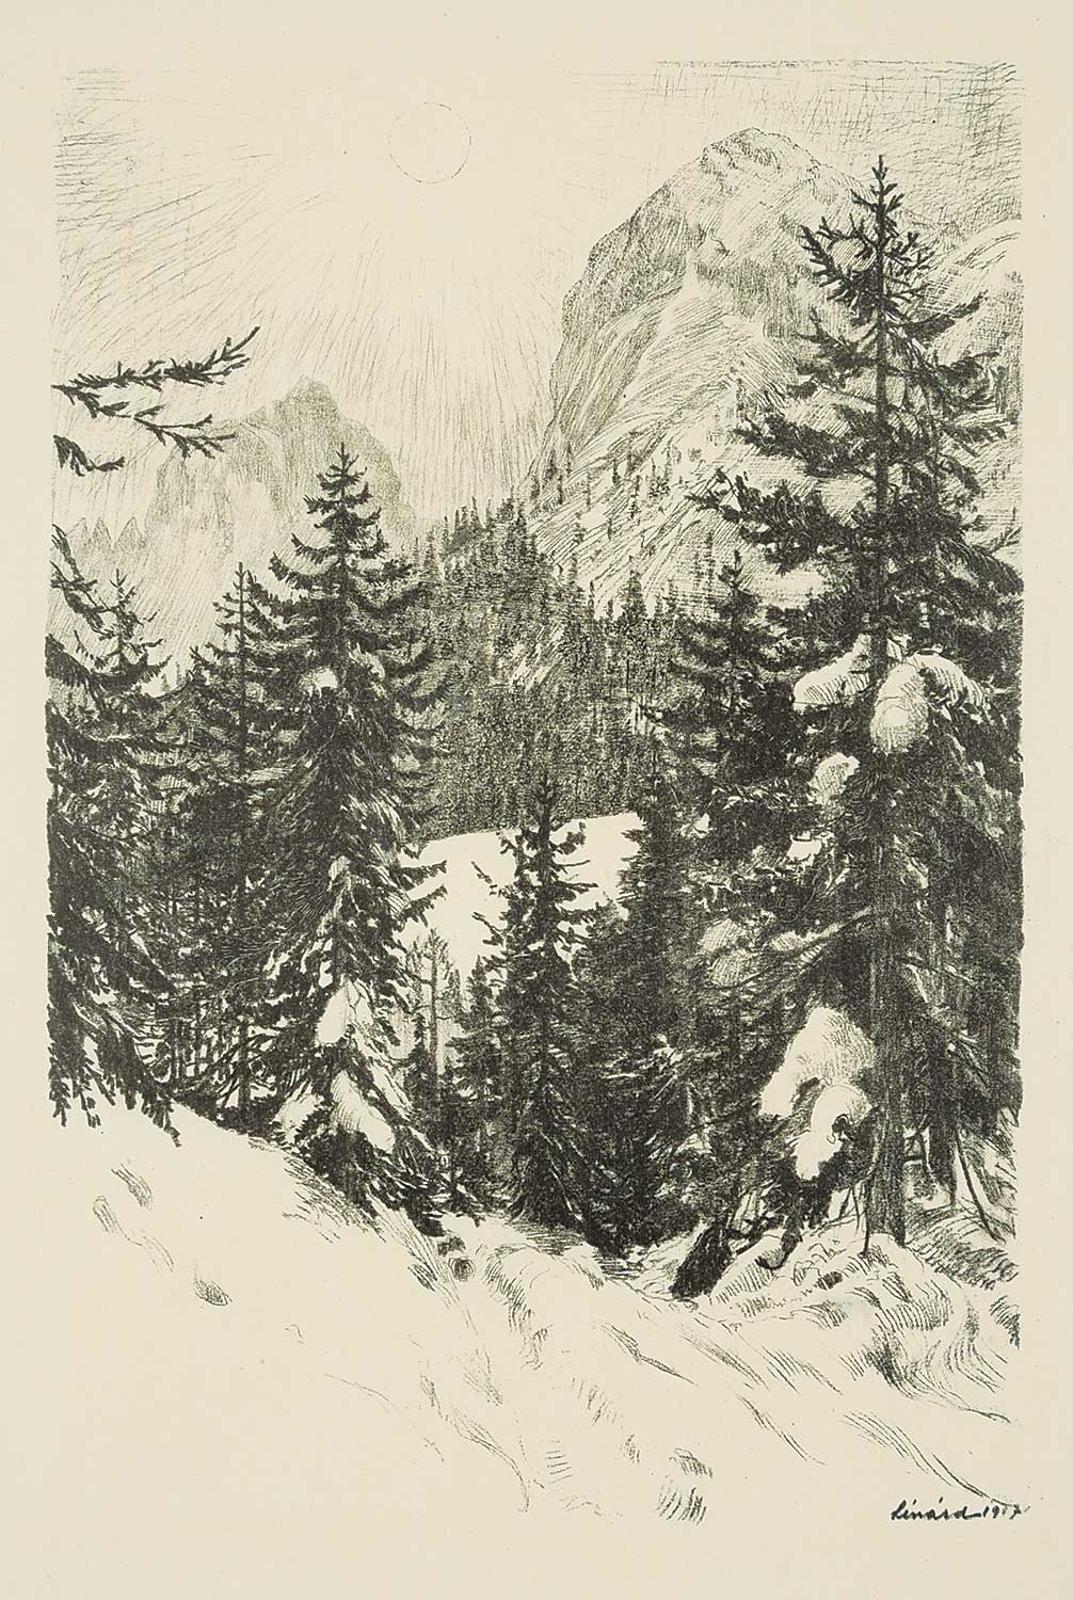 Robert Lenard (1879-1936) - Untitled - The Mountains